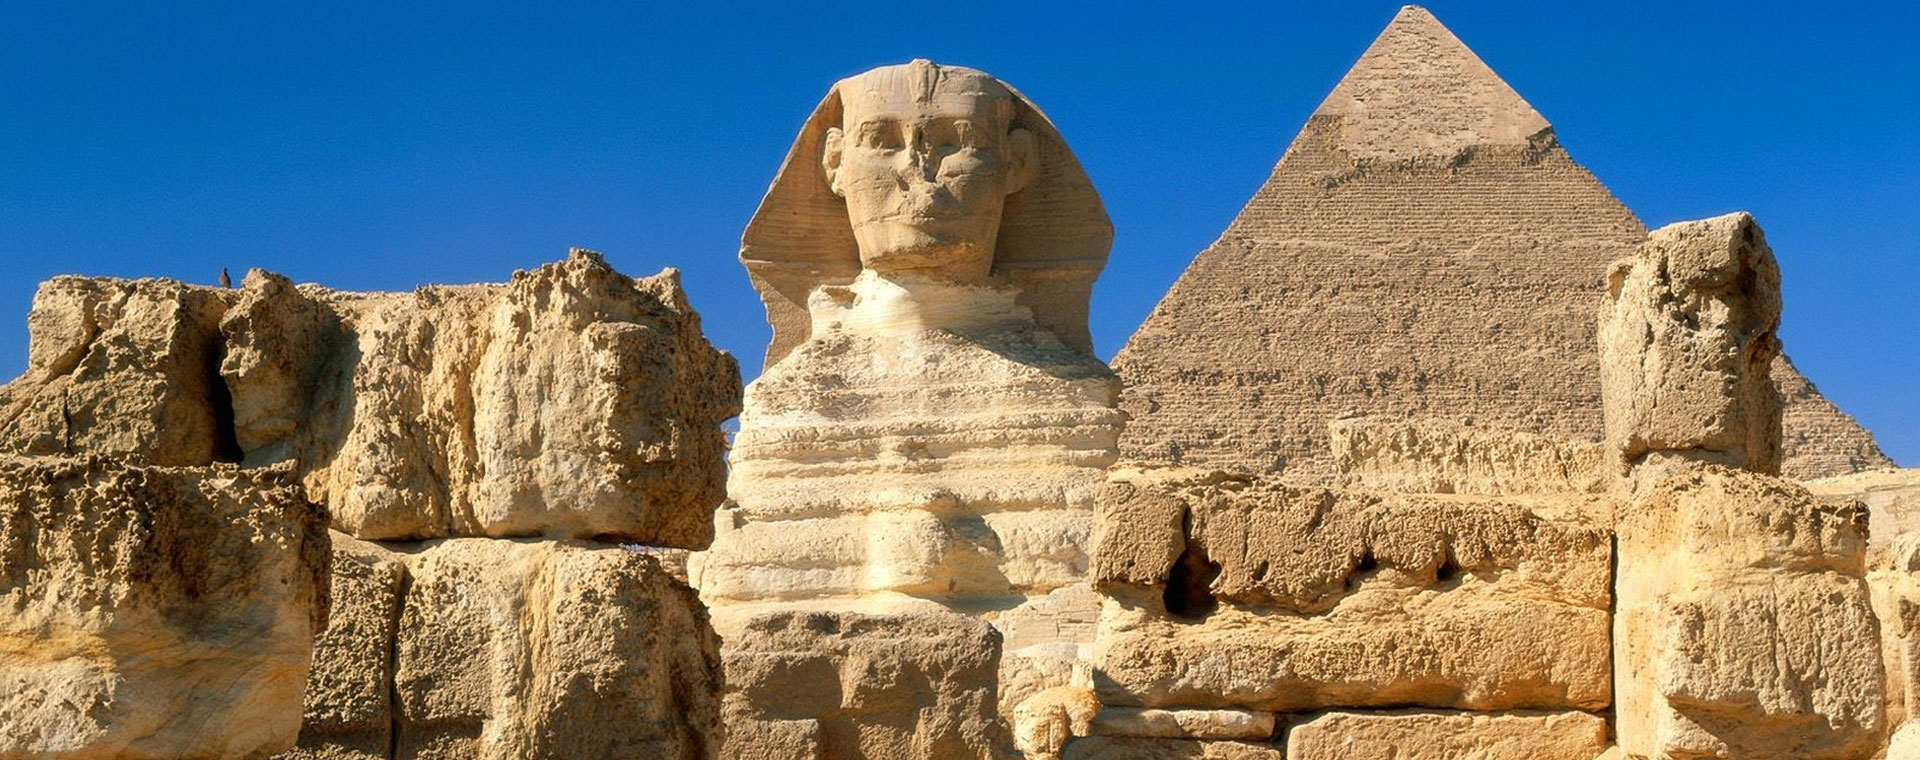 Egypt Destinations